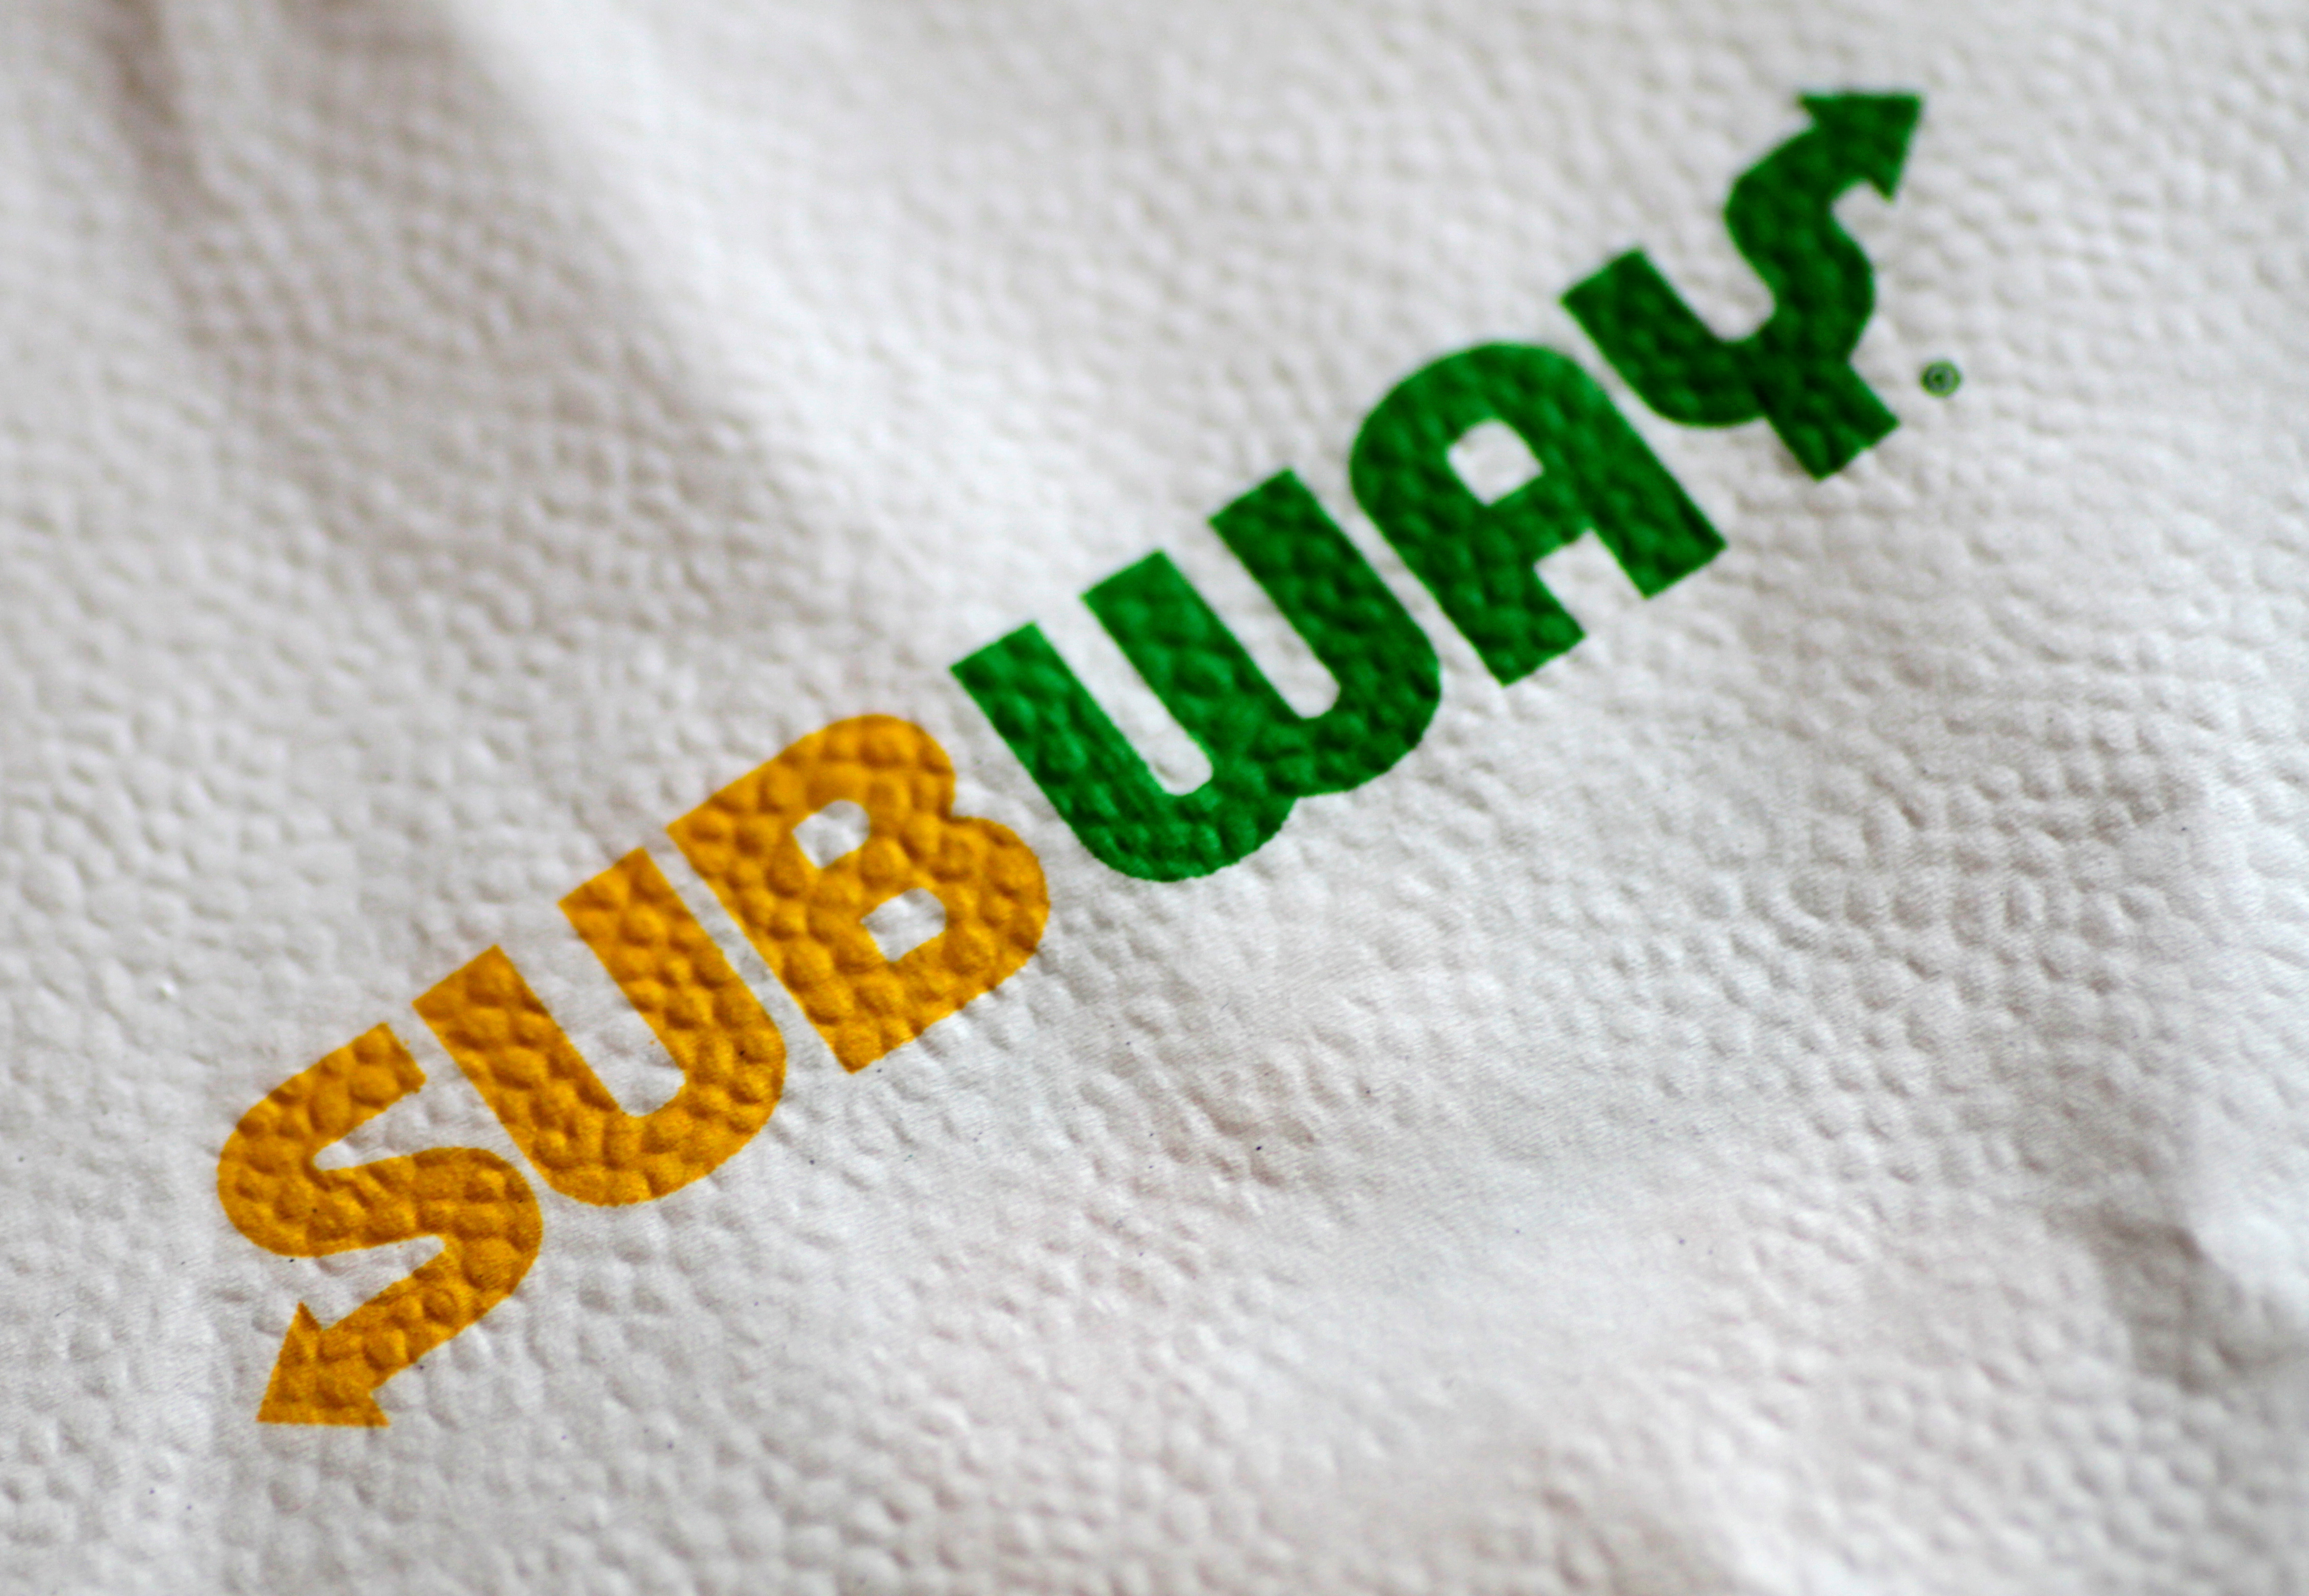 Illustration photo of a Subway logo on a napkin